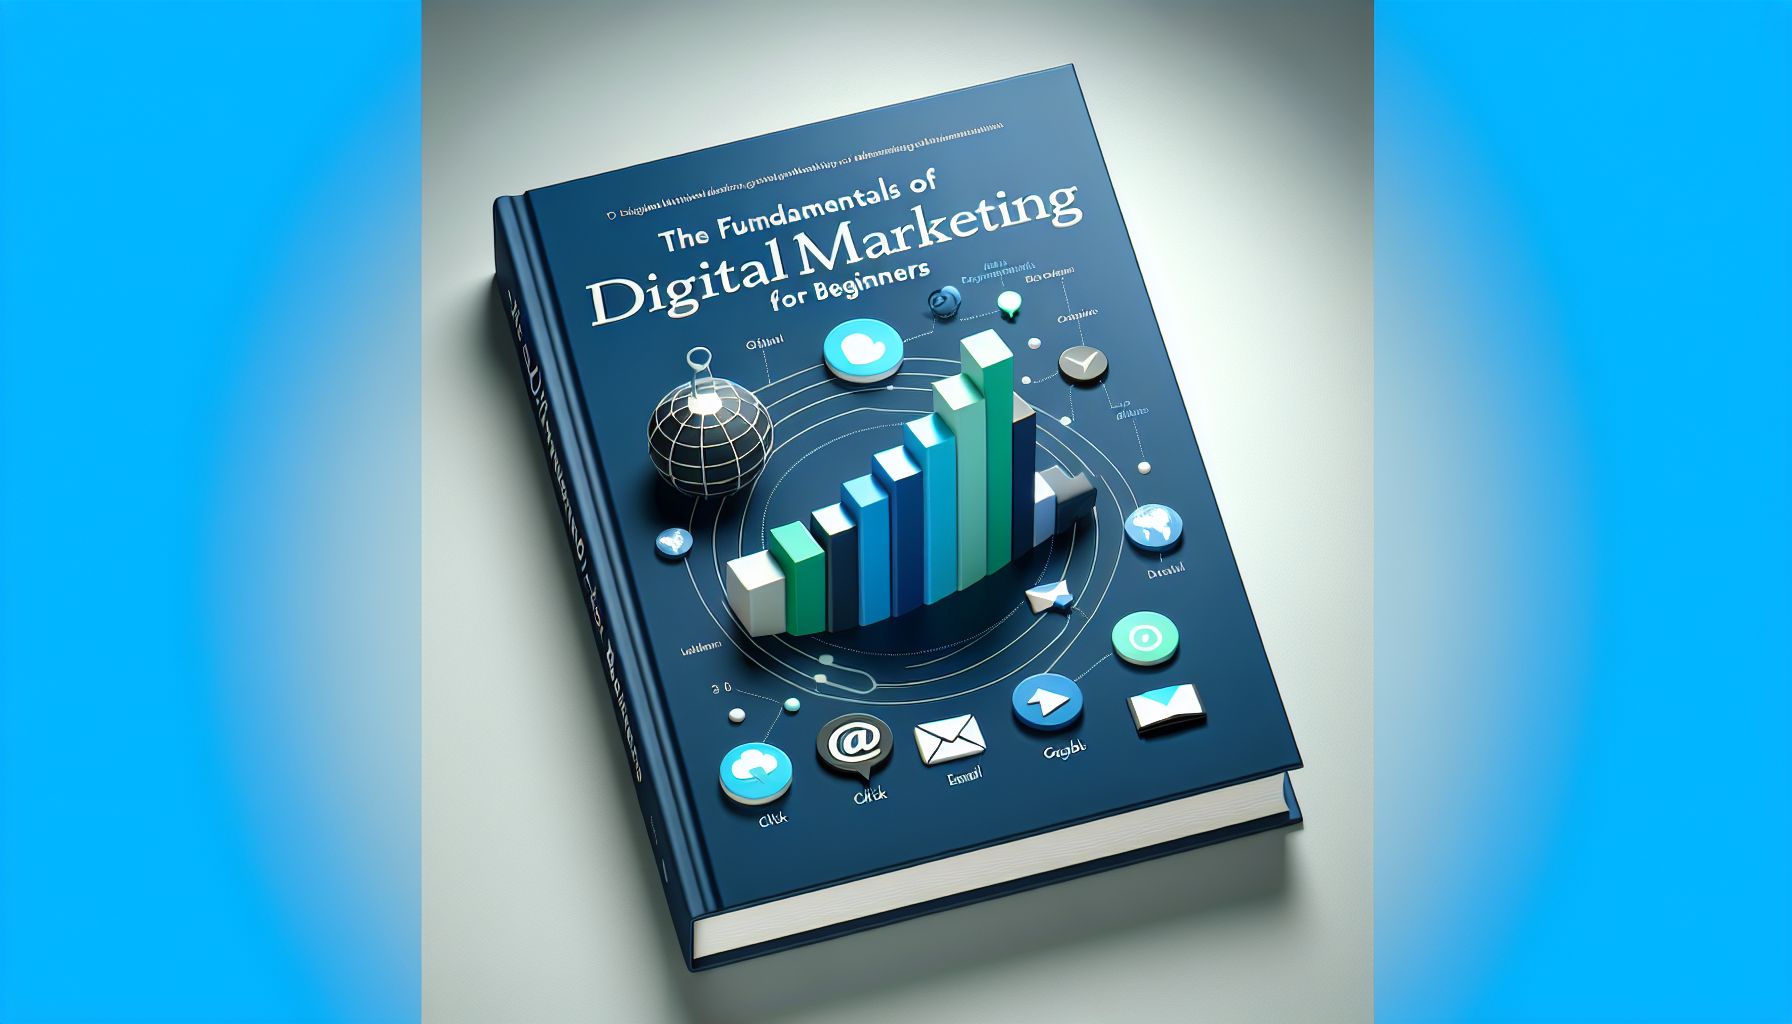 **The Fundamentals of Digital Marketing for Beginners**